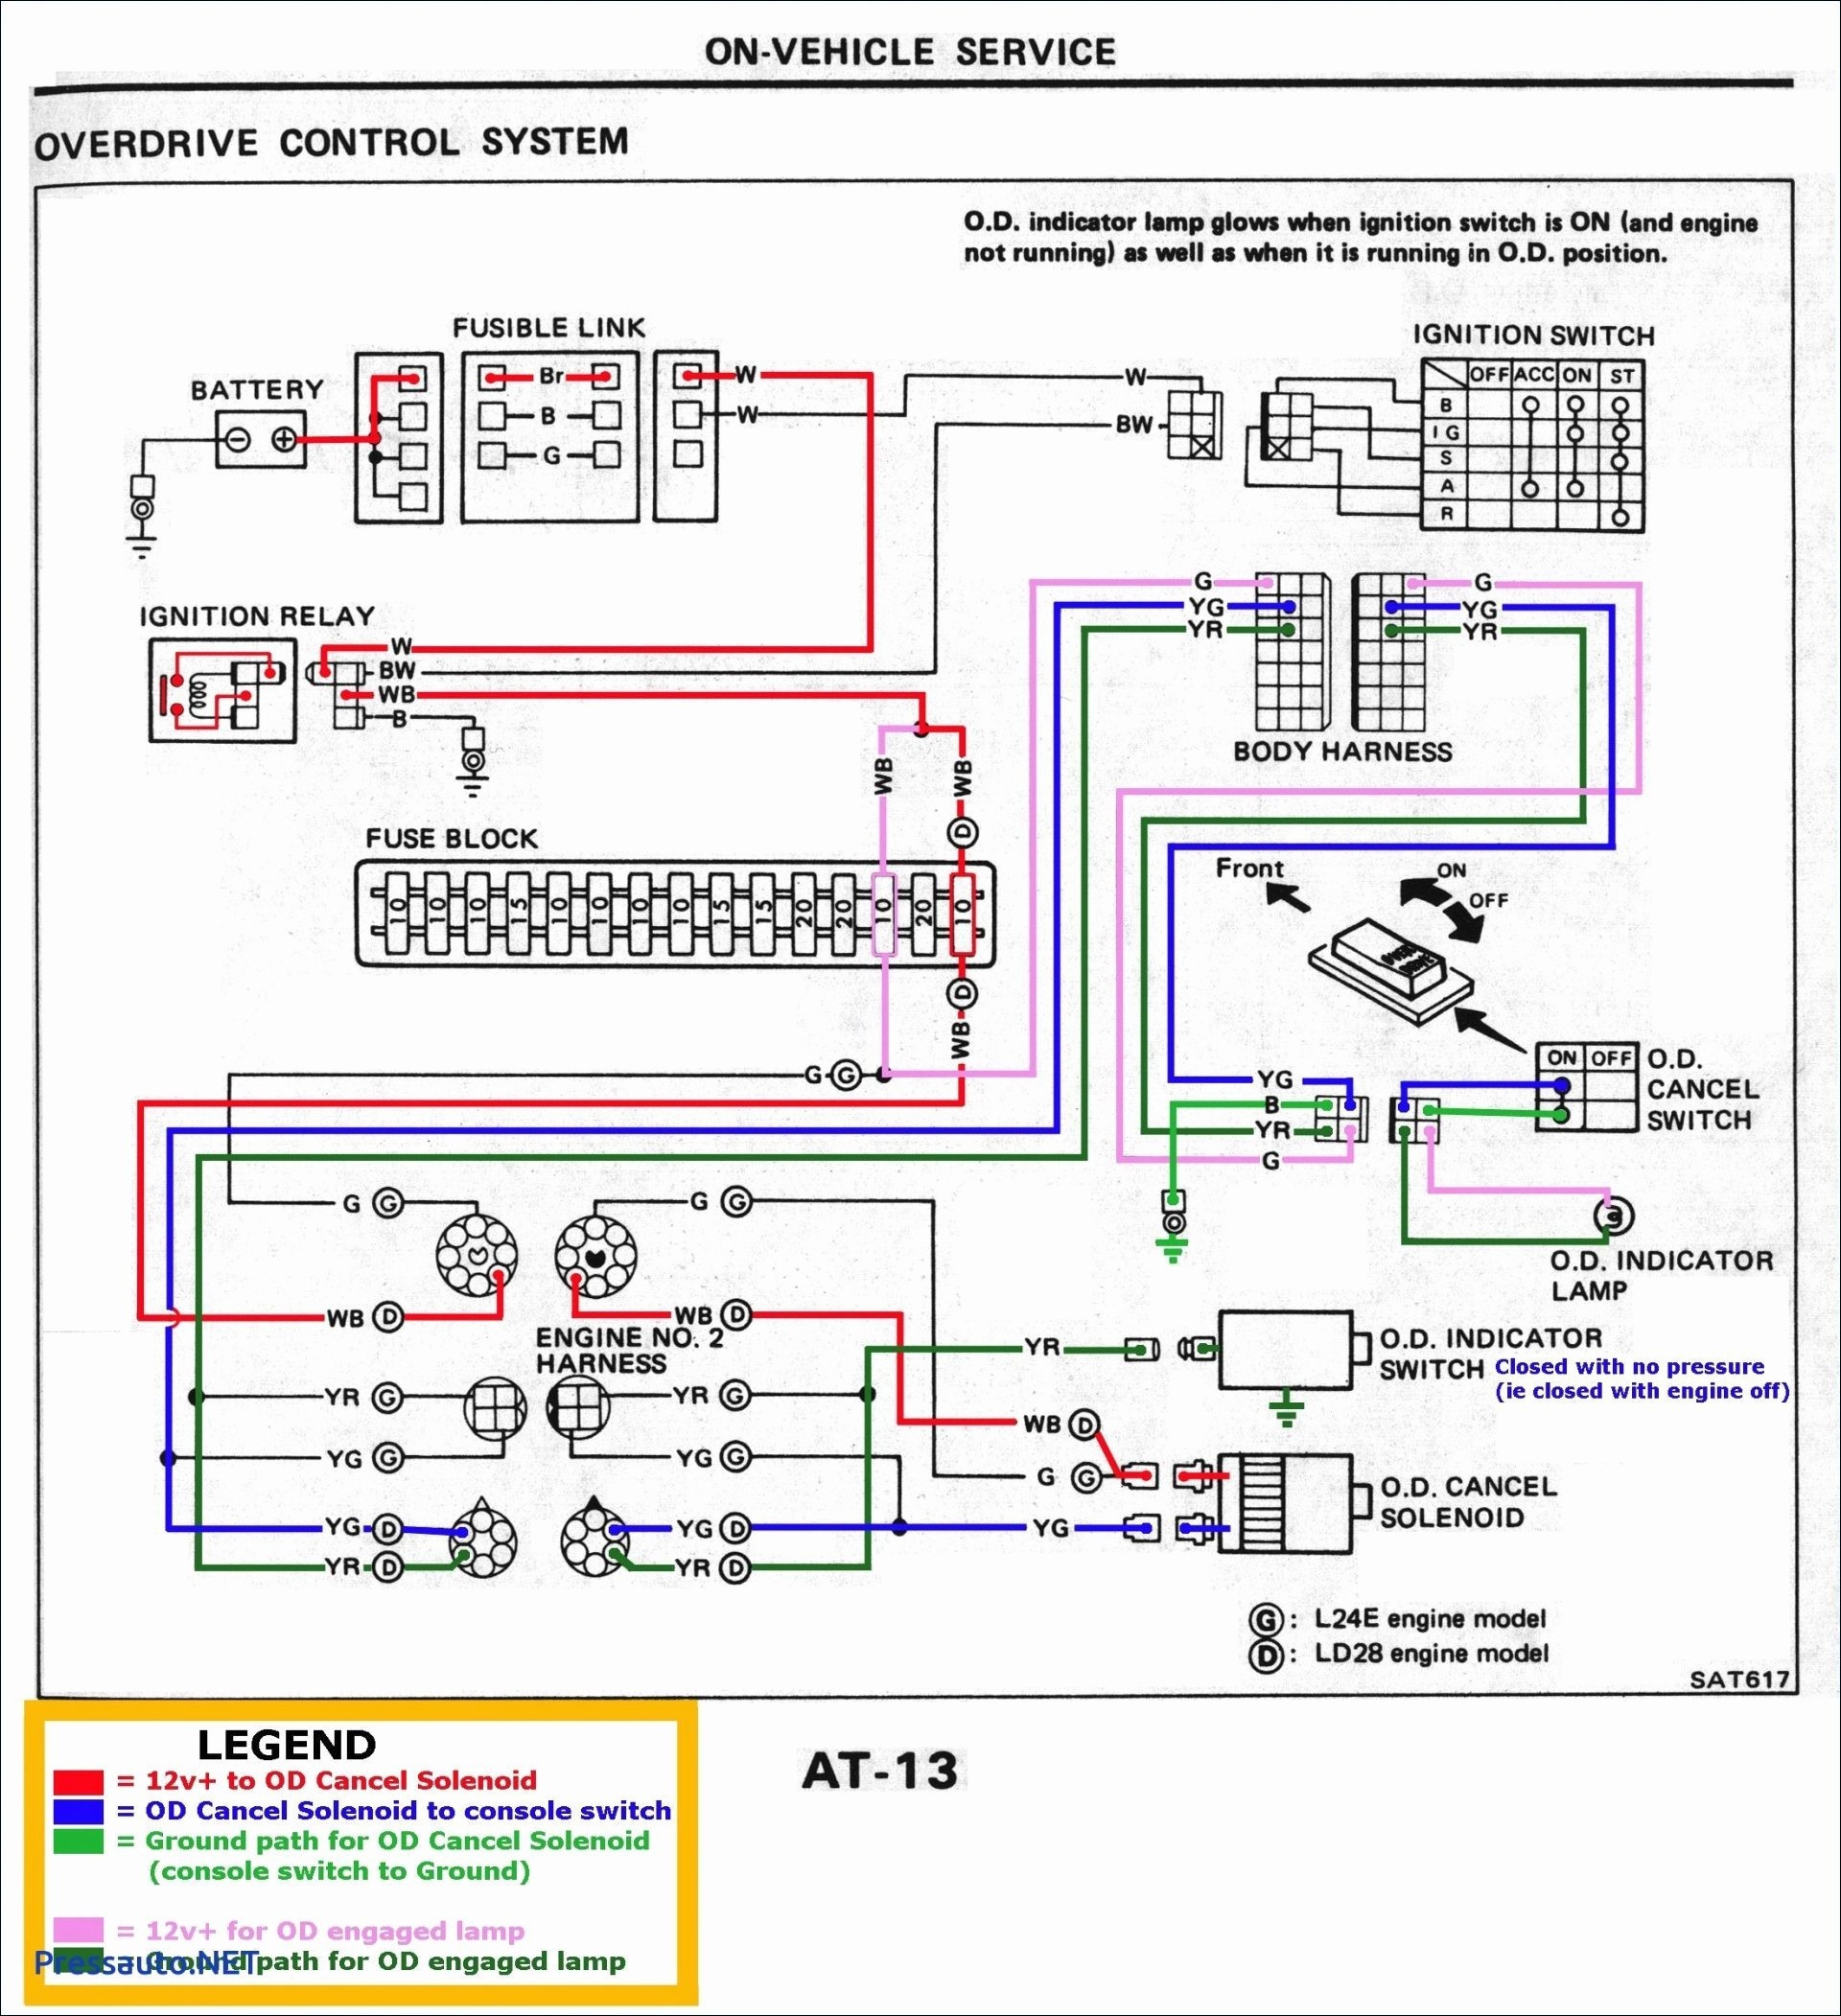 Engine Control Unit Block Diagram Start Stop Station Wiring Diagram Detailed Wiring Diagrams Of Engine Control Unit Block Diagram